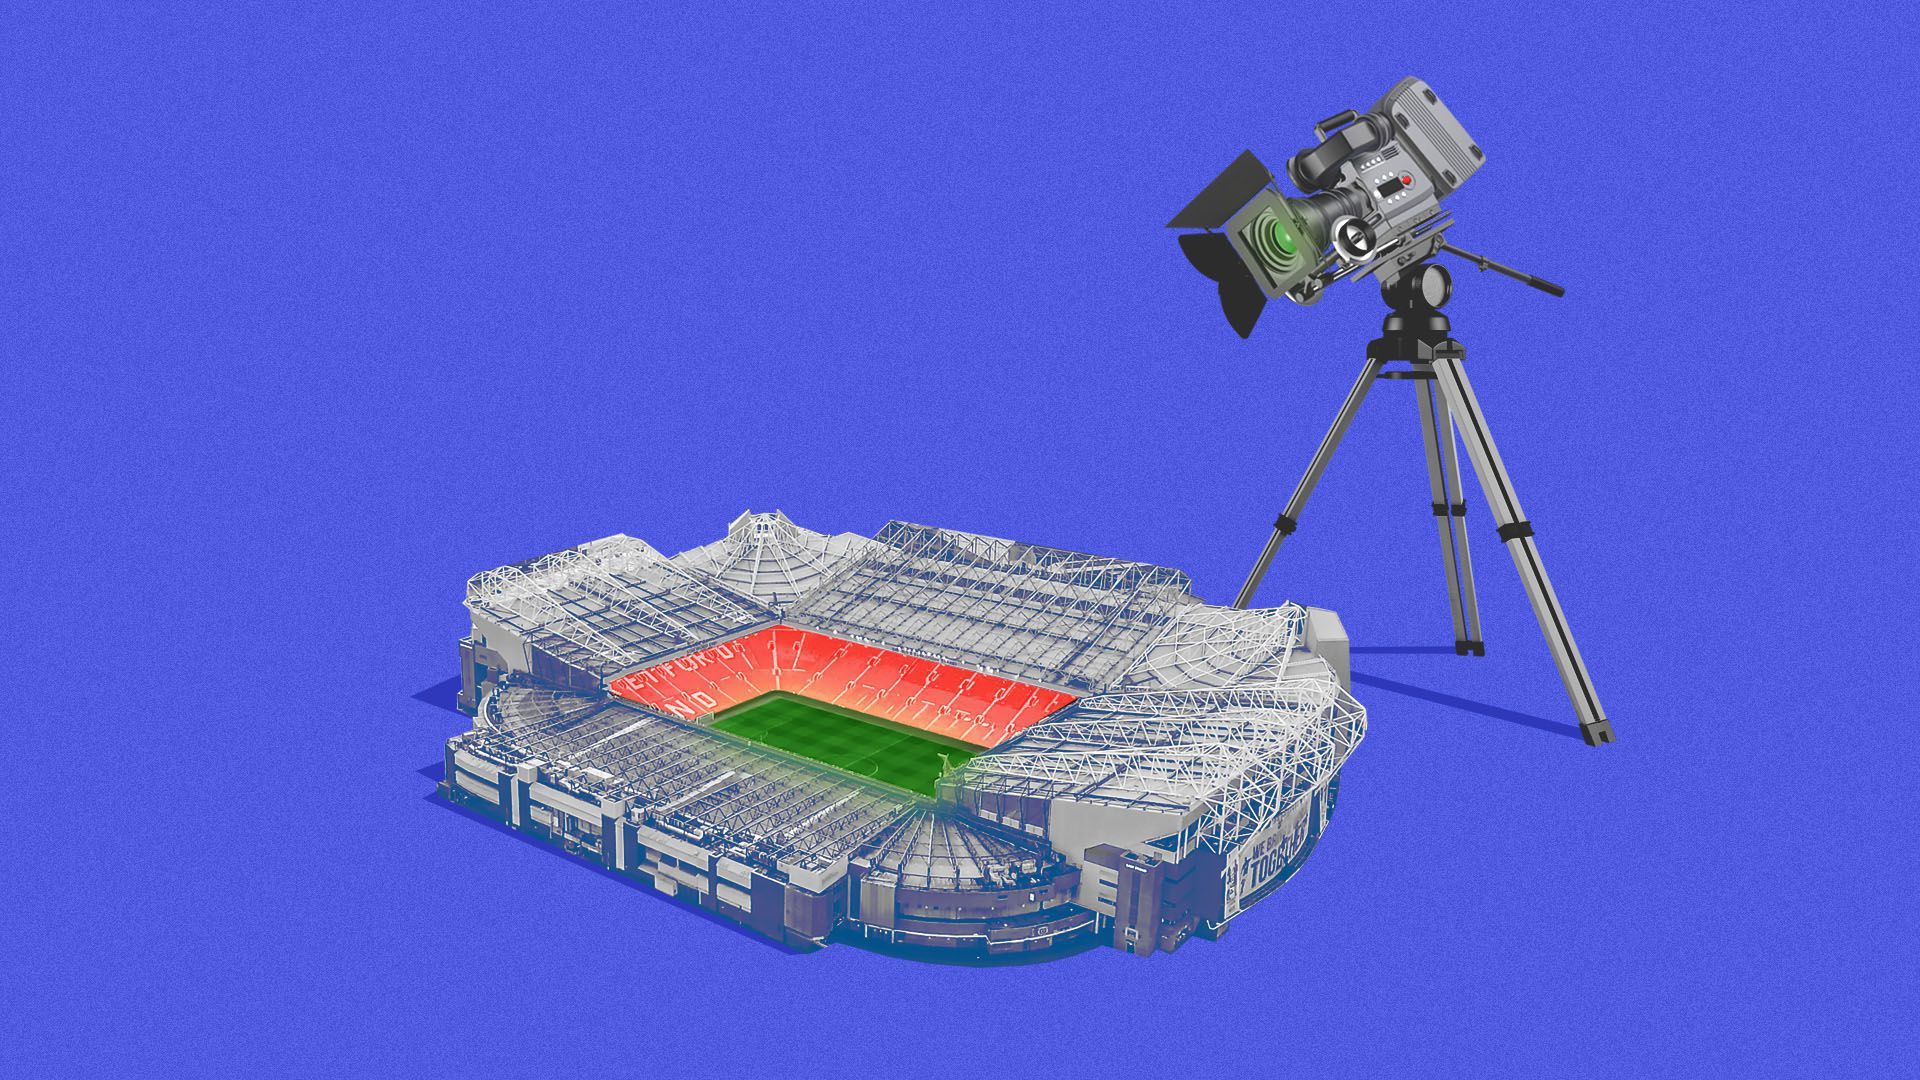 TV camera looking at stadium